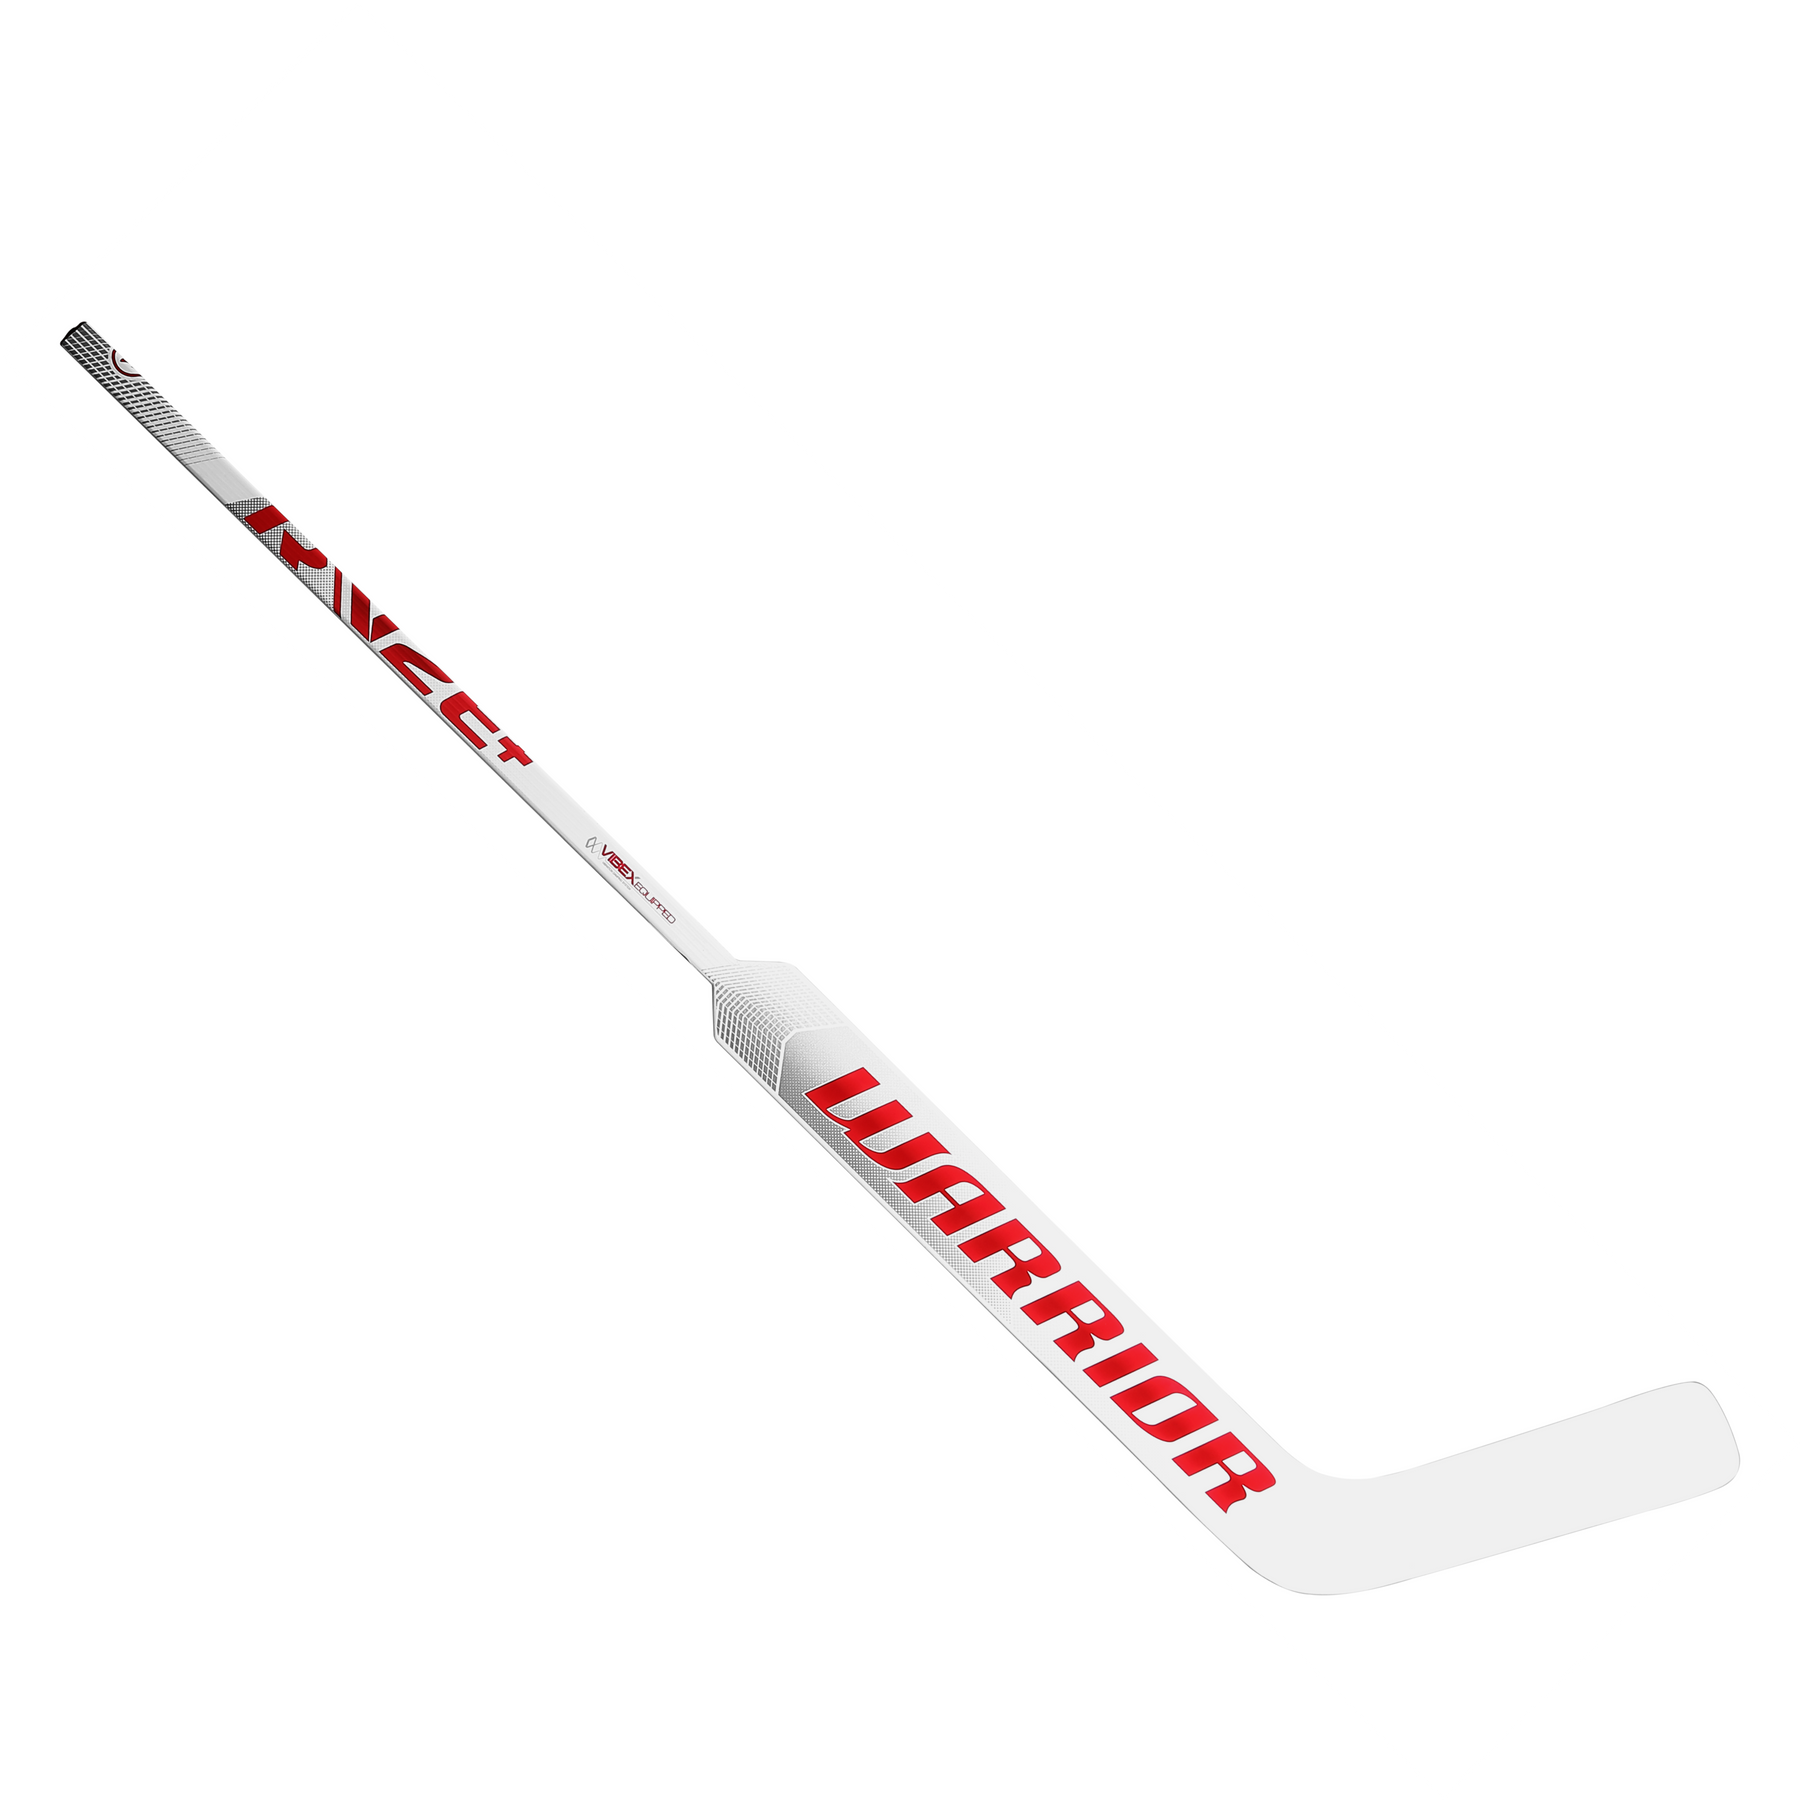 Warrior Ritual V2 E+ Intermediate Goalie Stick (White/Red)